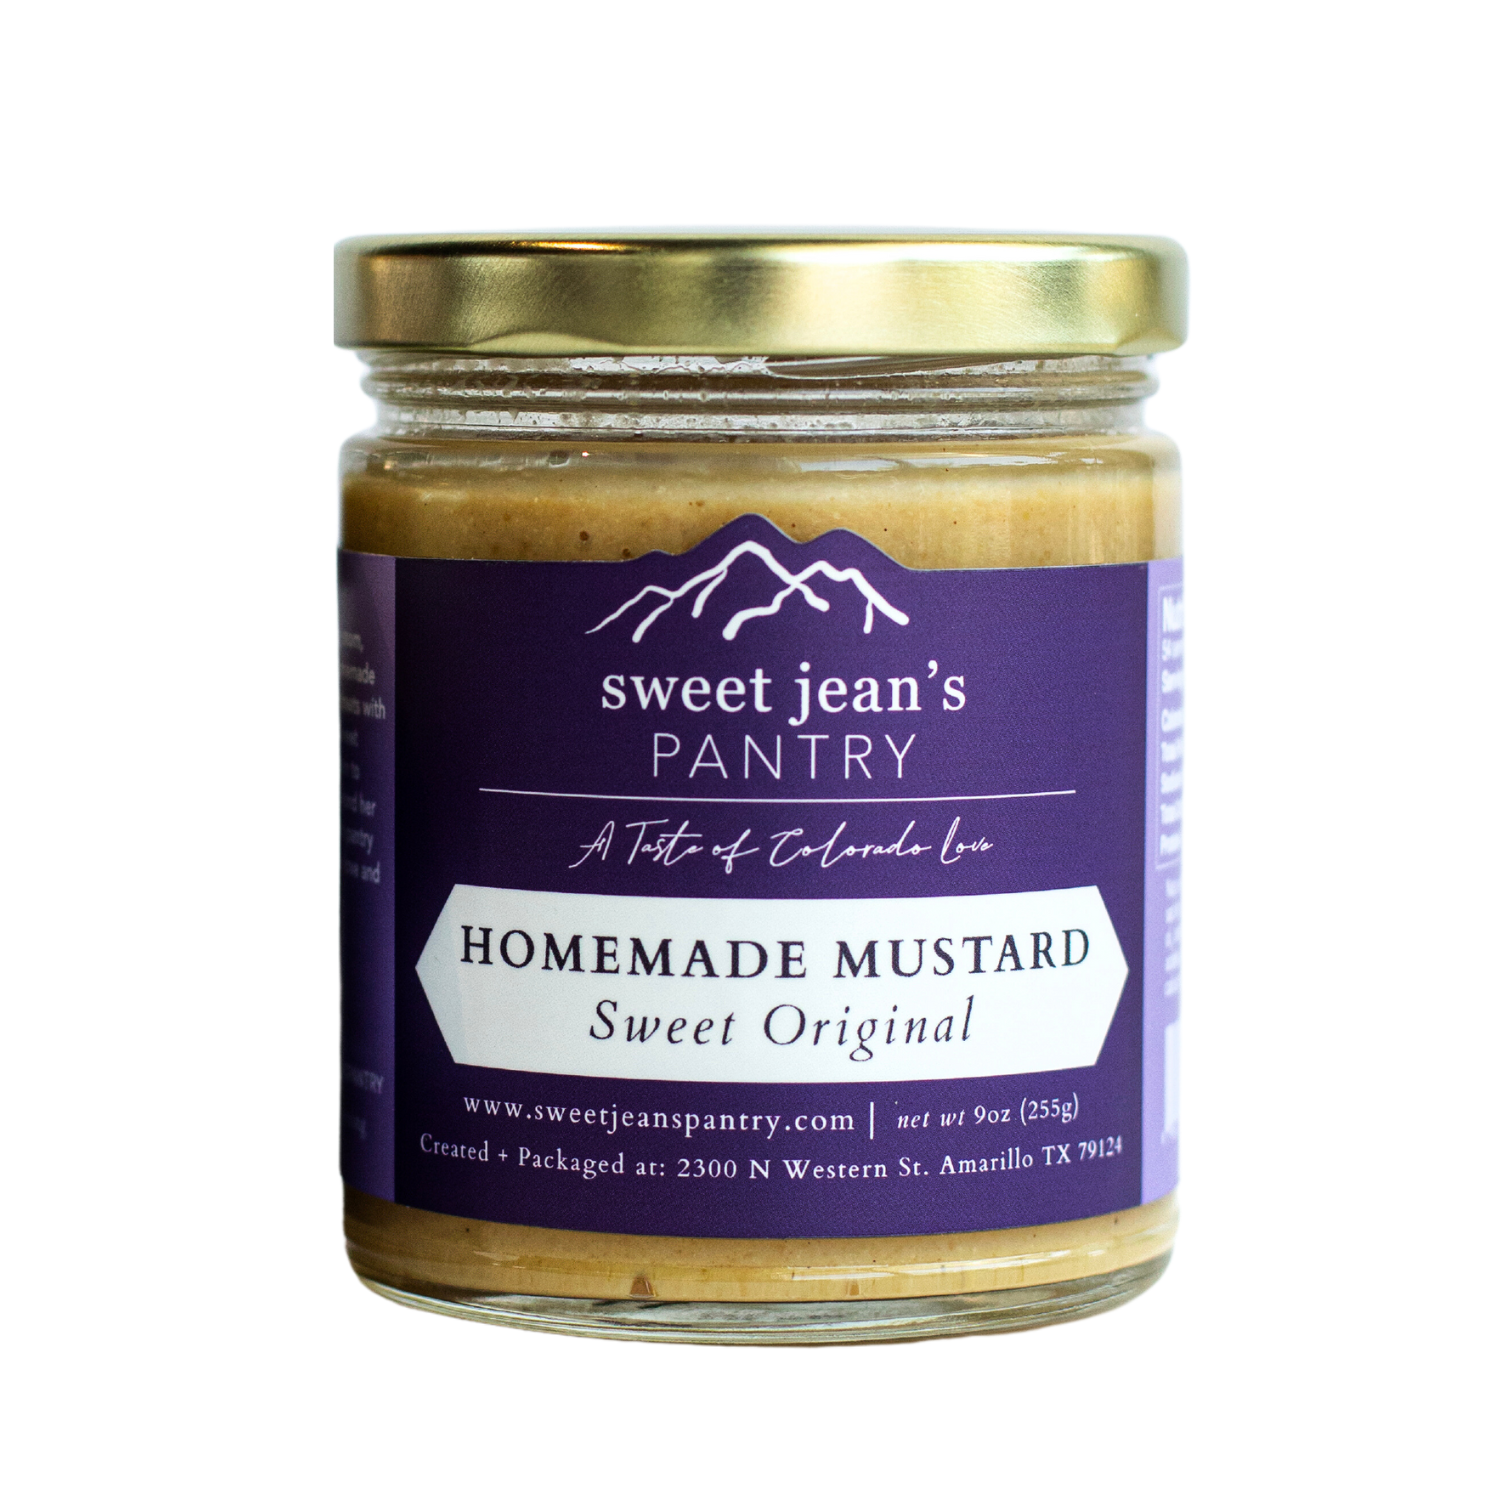 Homemade Mustard Sweet Original